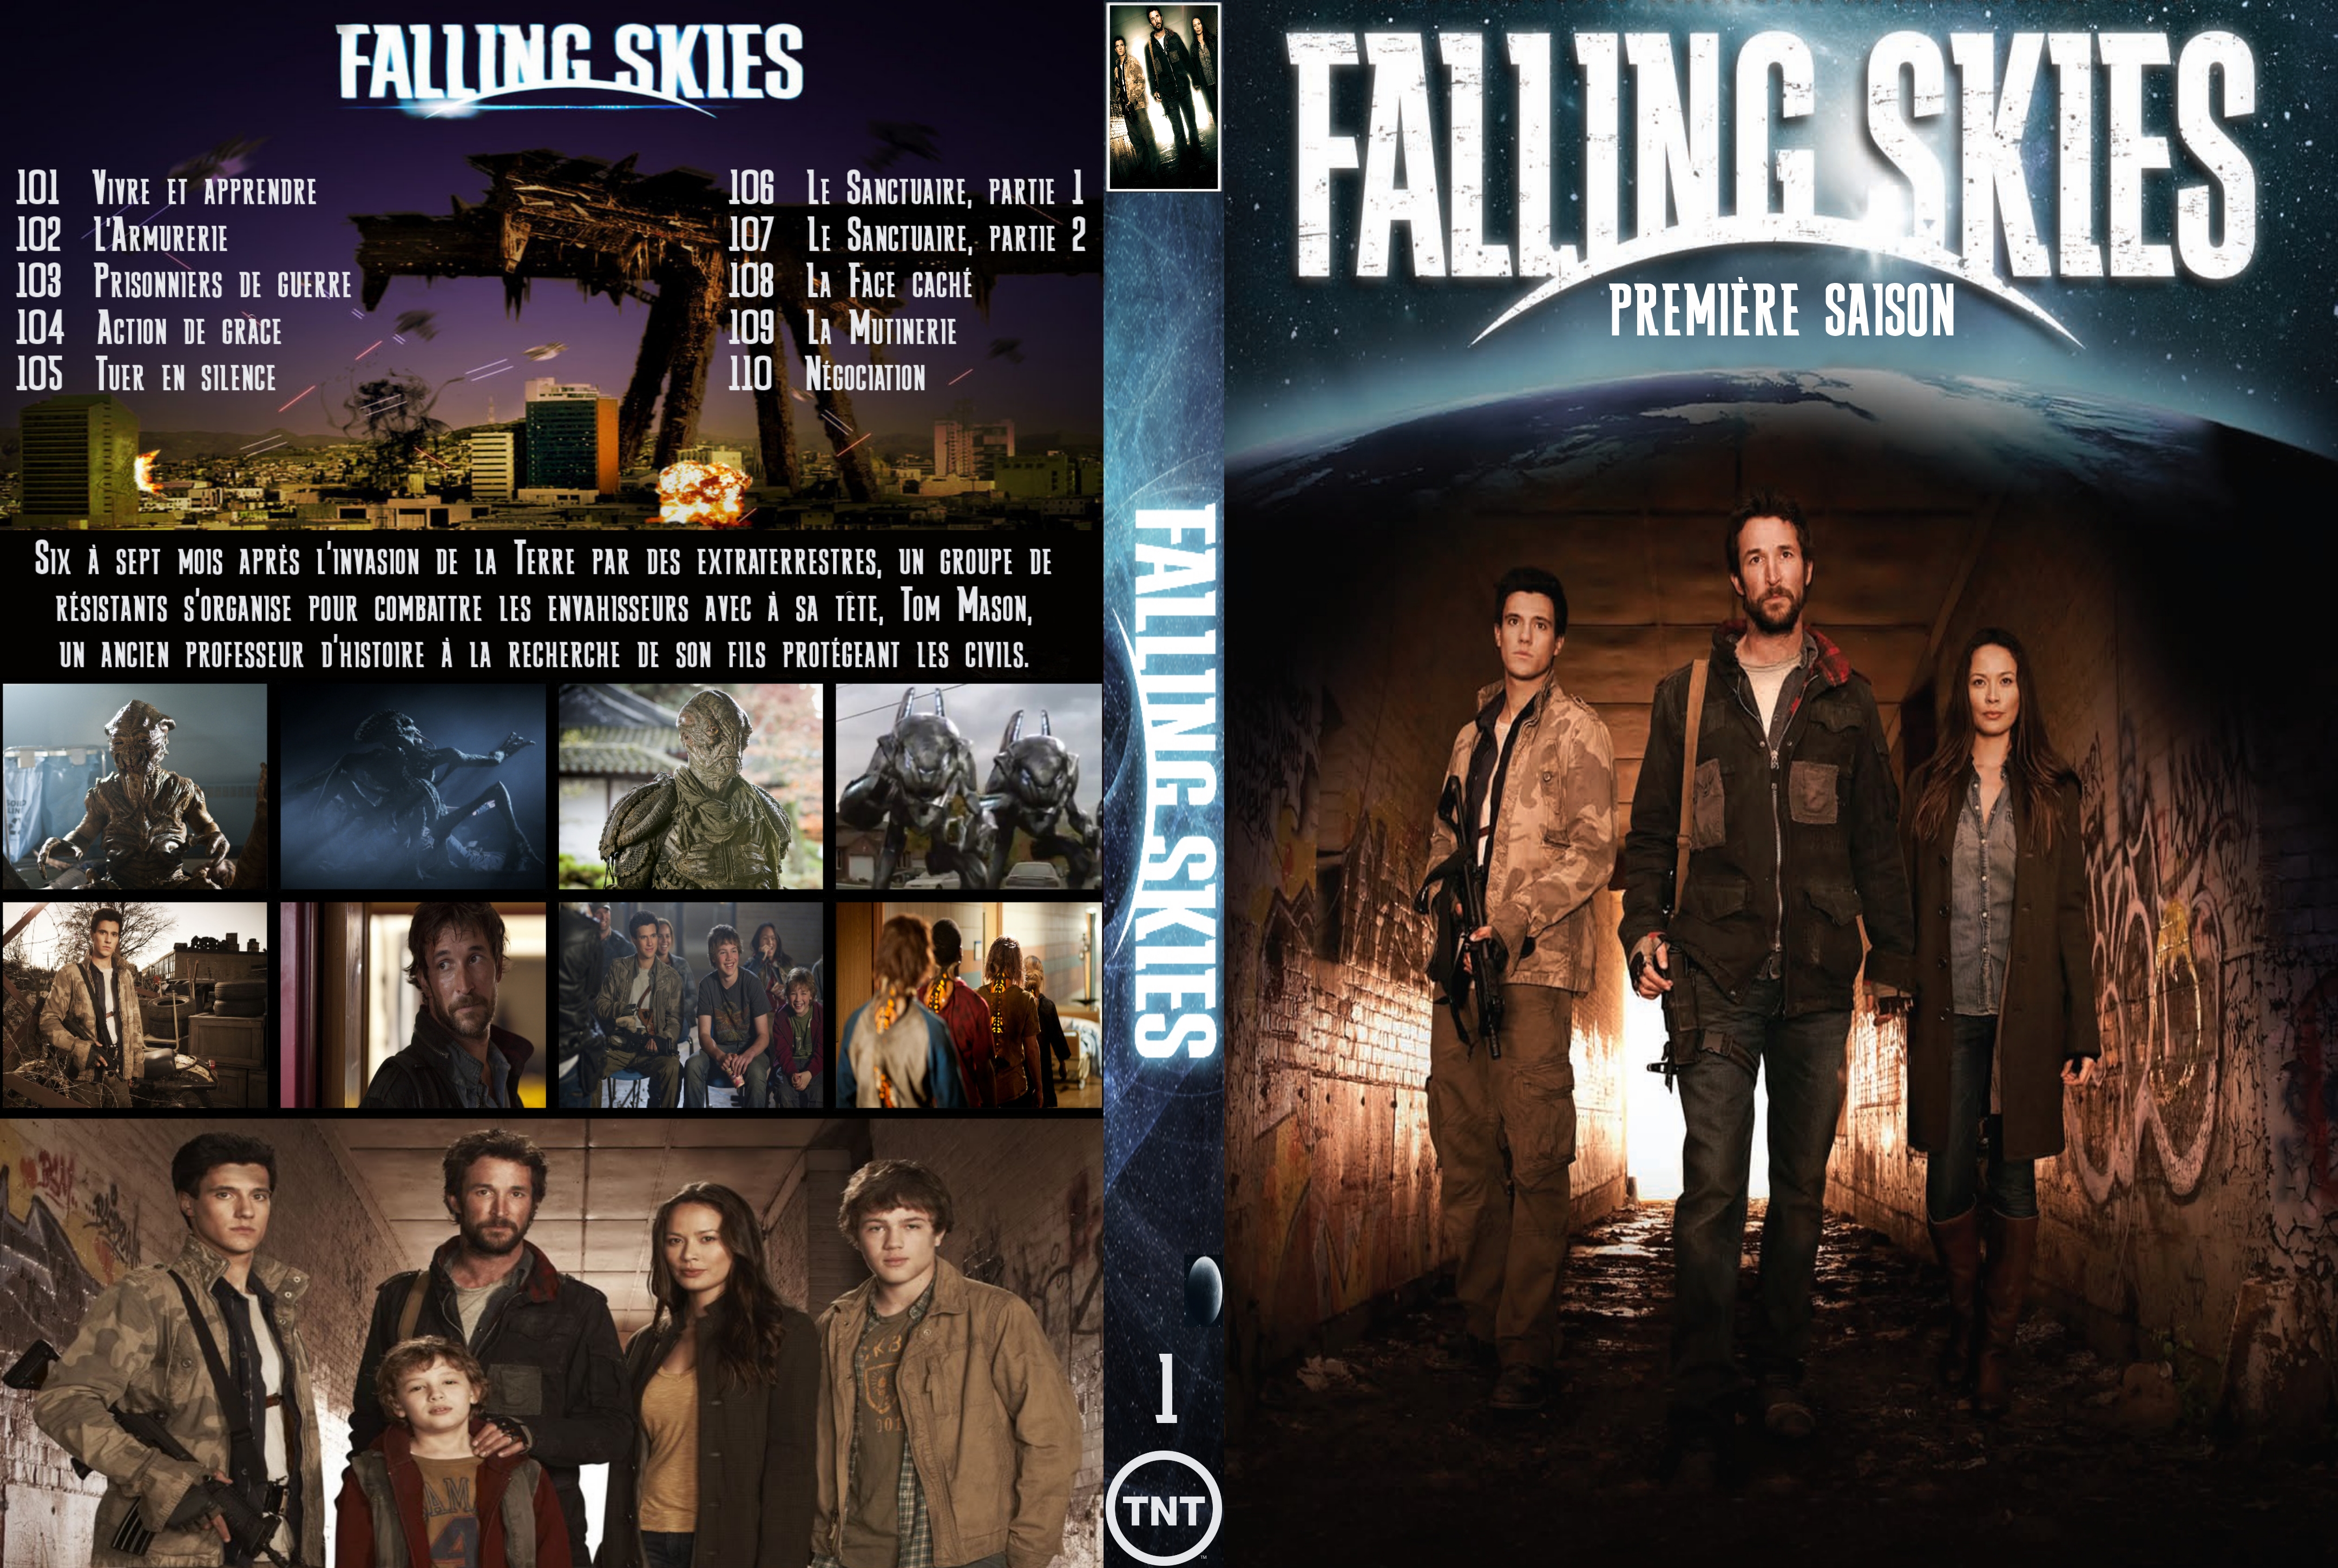 Jaquette DVD Falling Skies Saison 1 custom v2